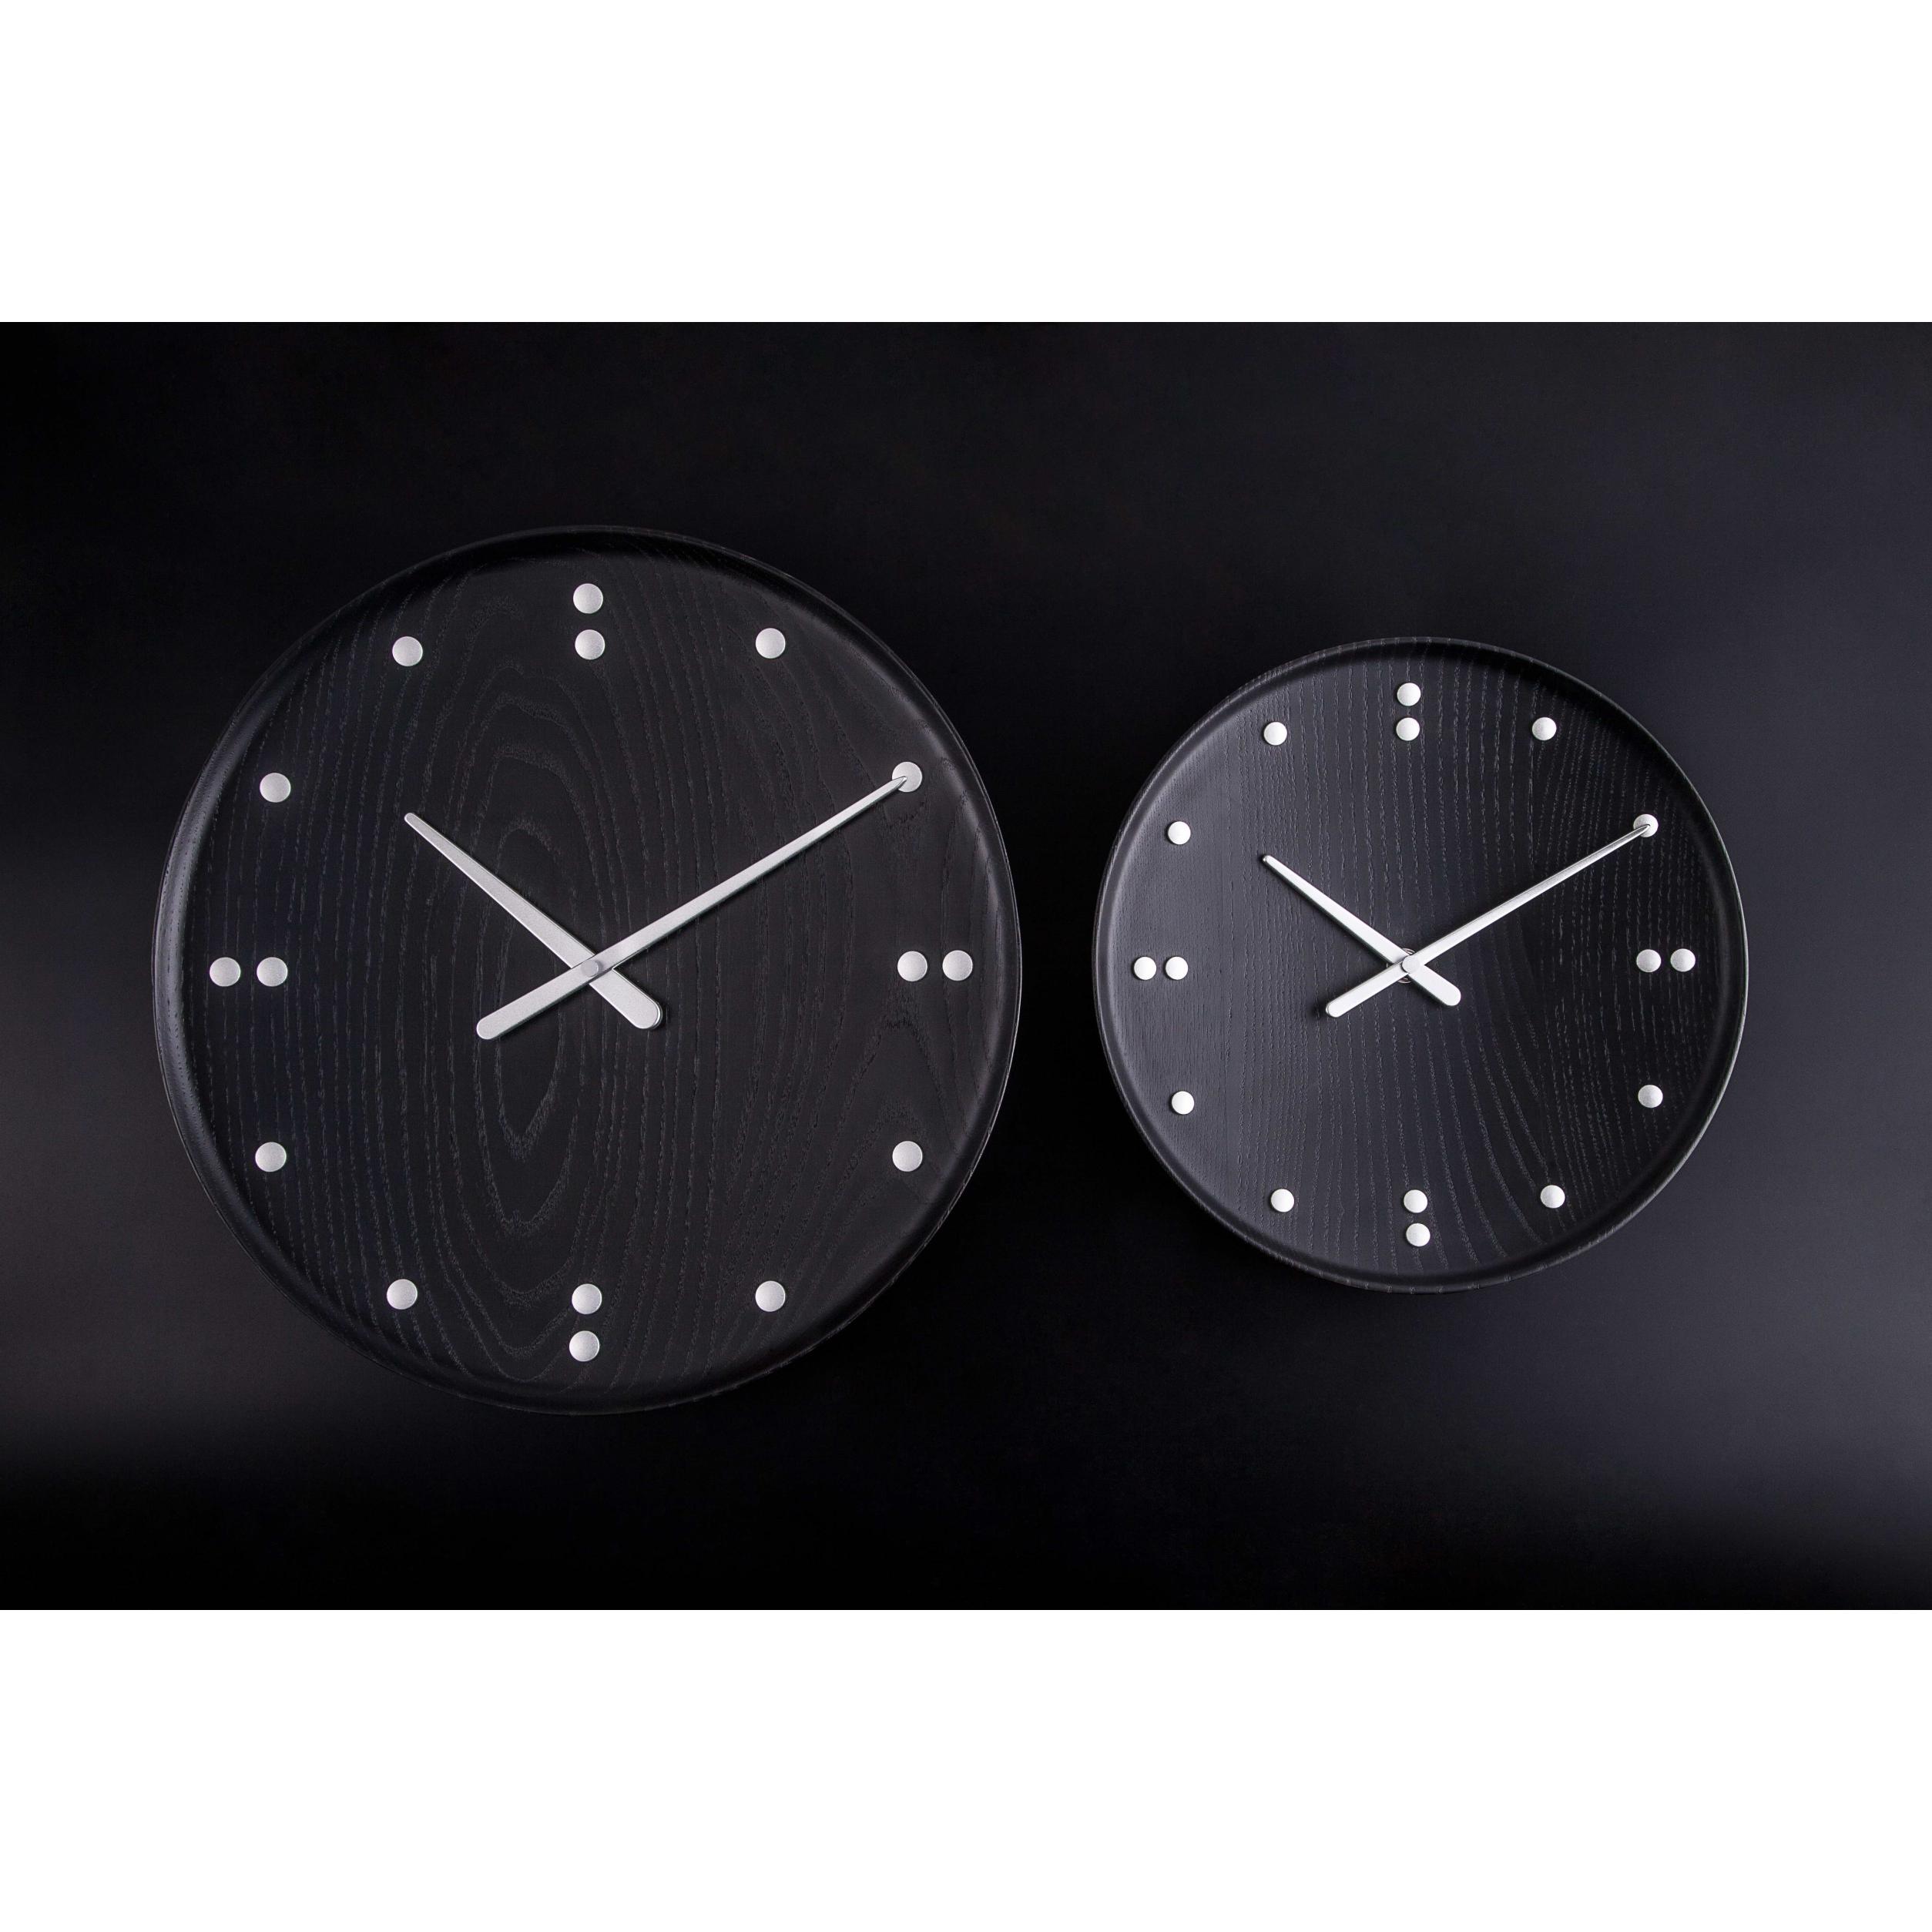 Architectmade Finn Juhl Wall Clock Black, Ø25 cm